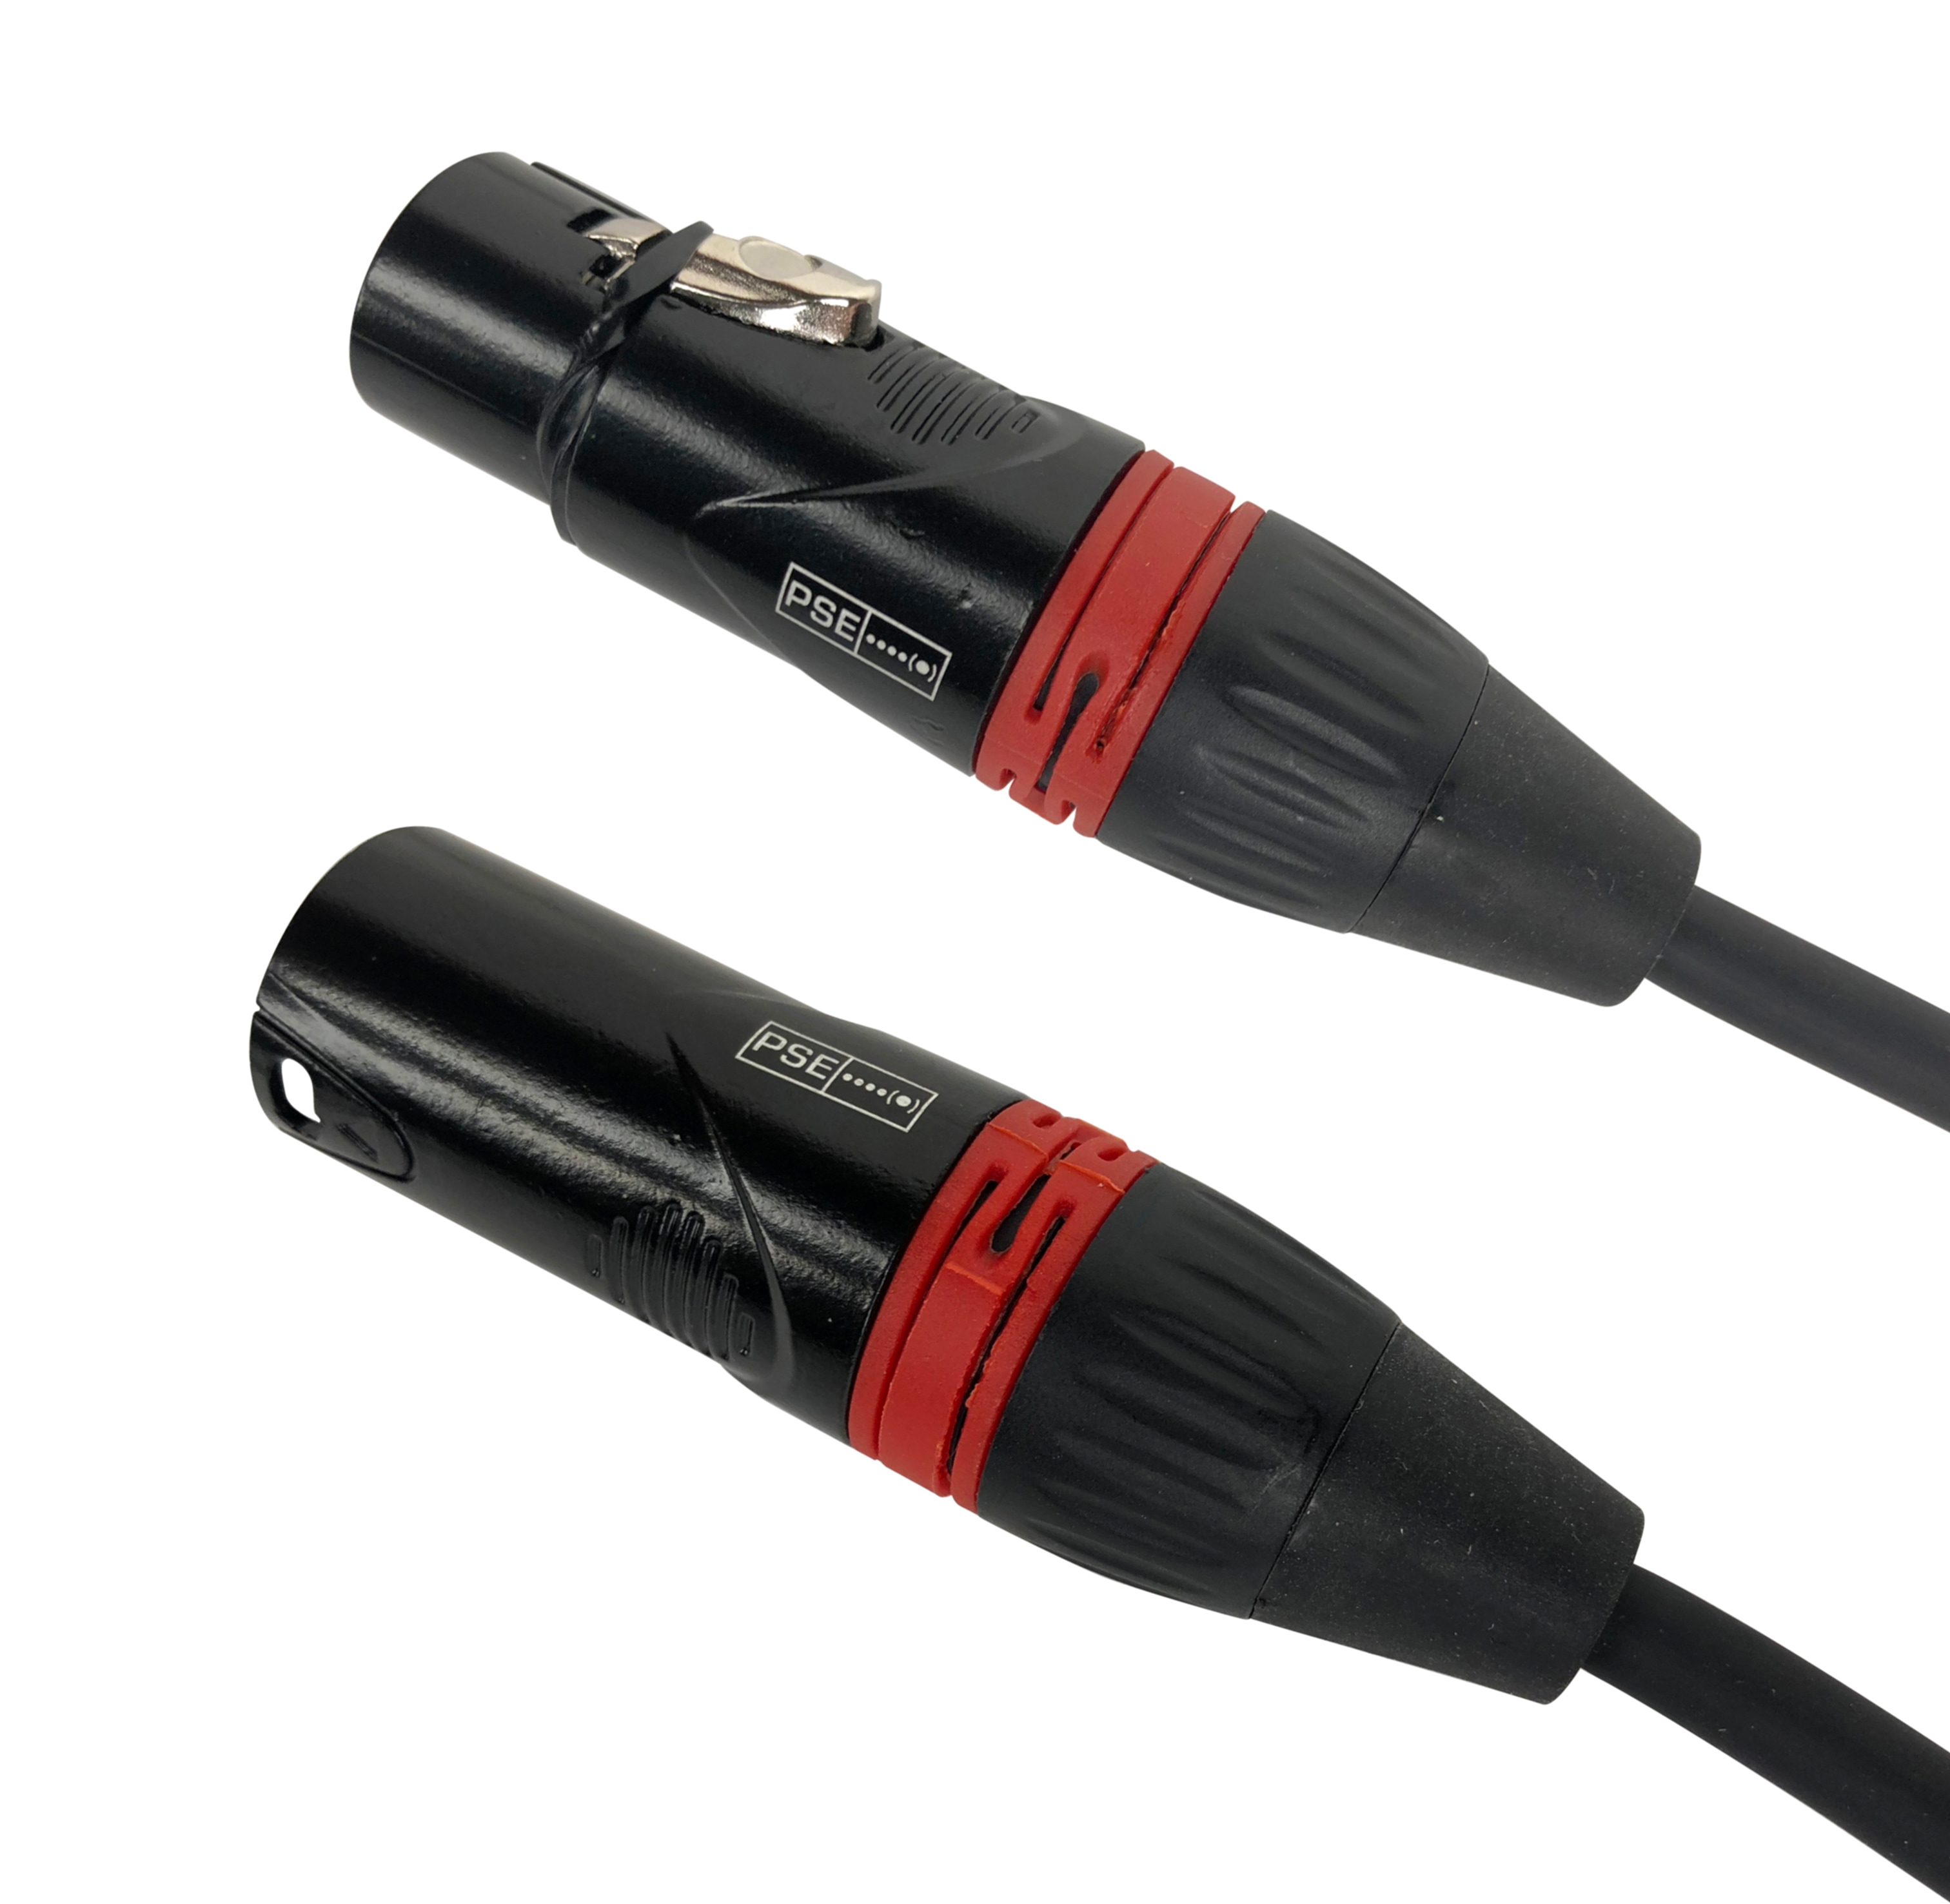 Pulse Mikrofonkabel 3m XLR/XLR